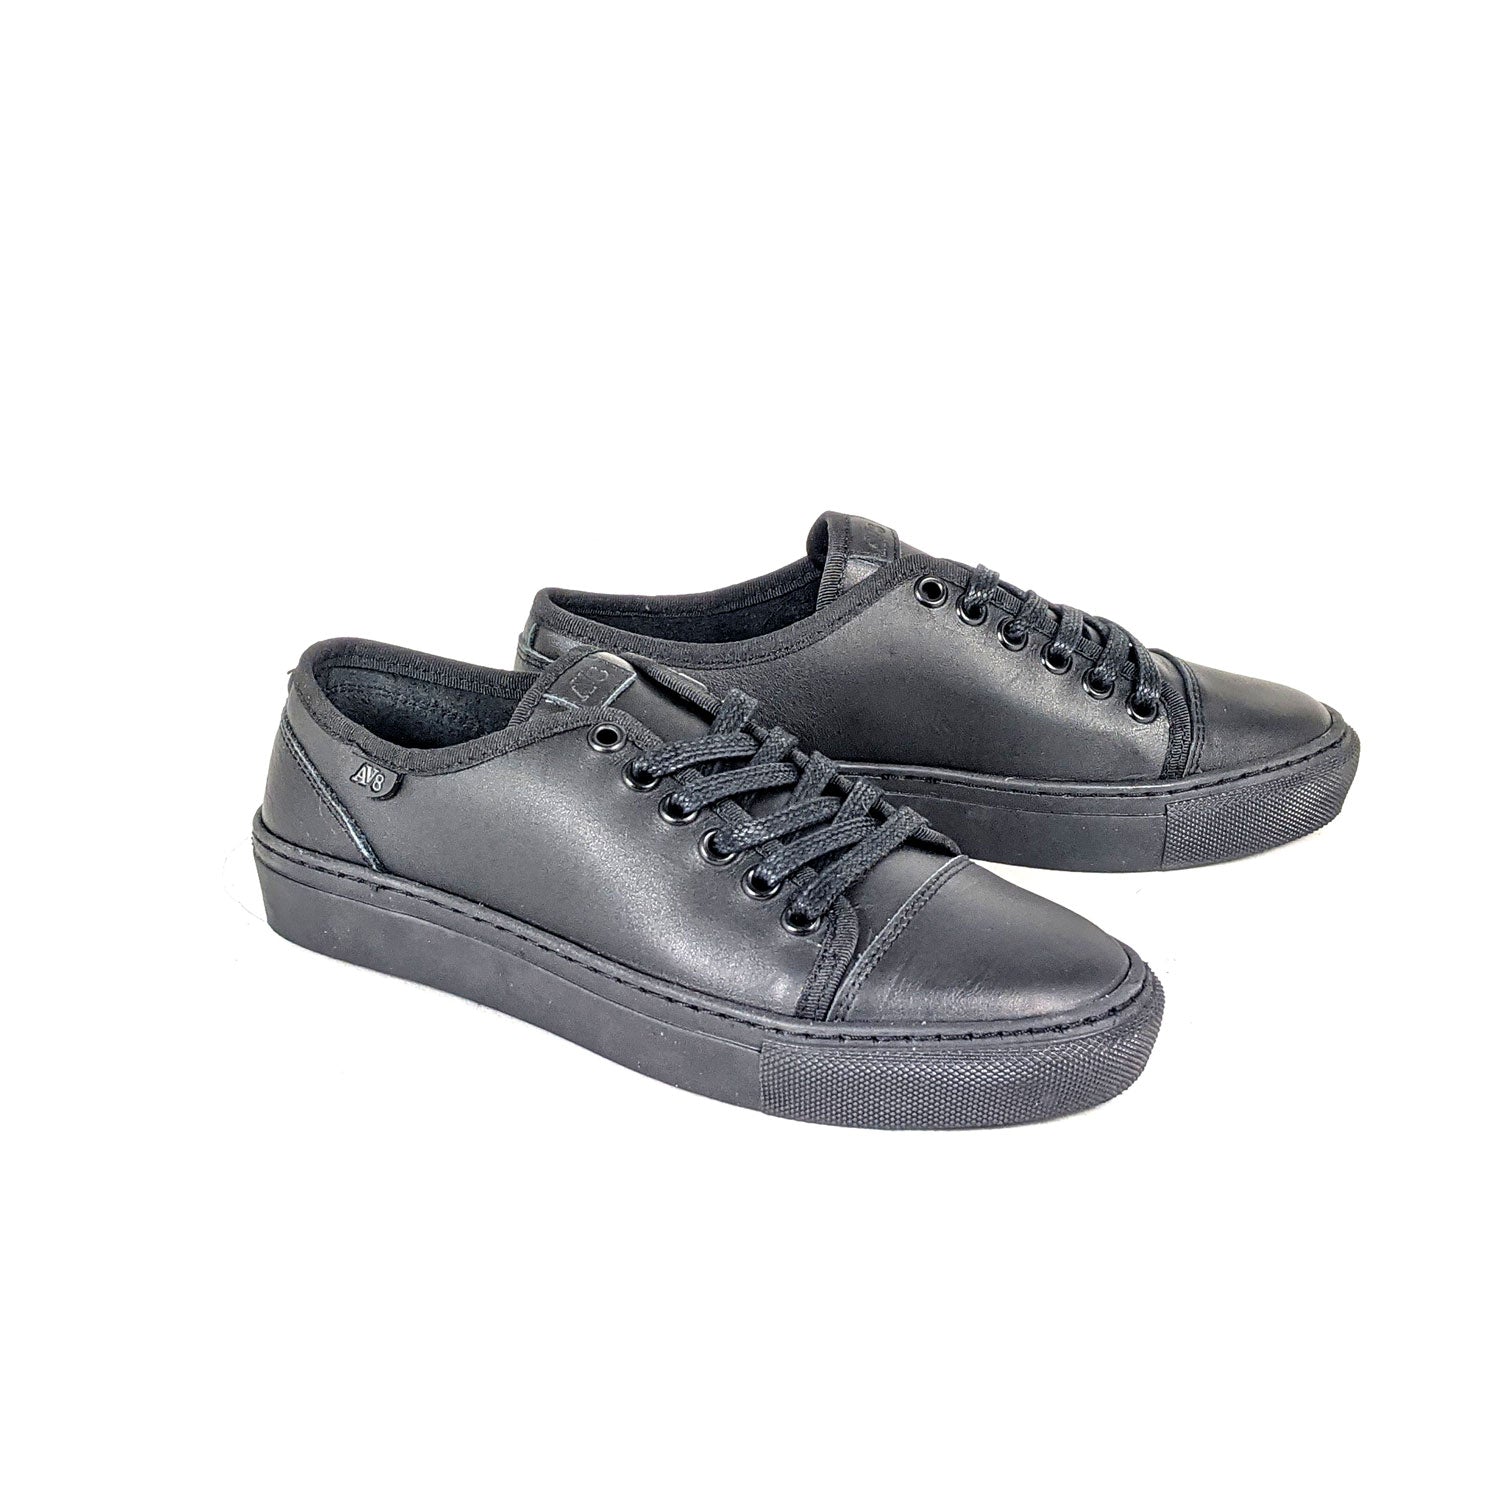 Dubarry Kanvas Leather Lace Av8 Trainer - Black 1 Shaws Department Stores